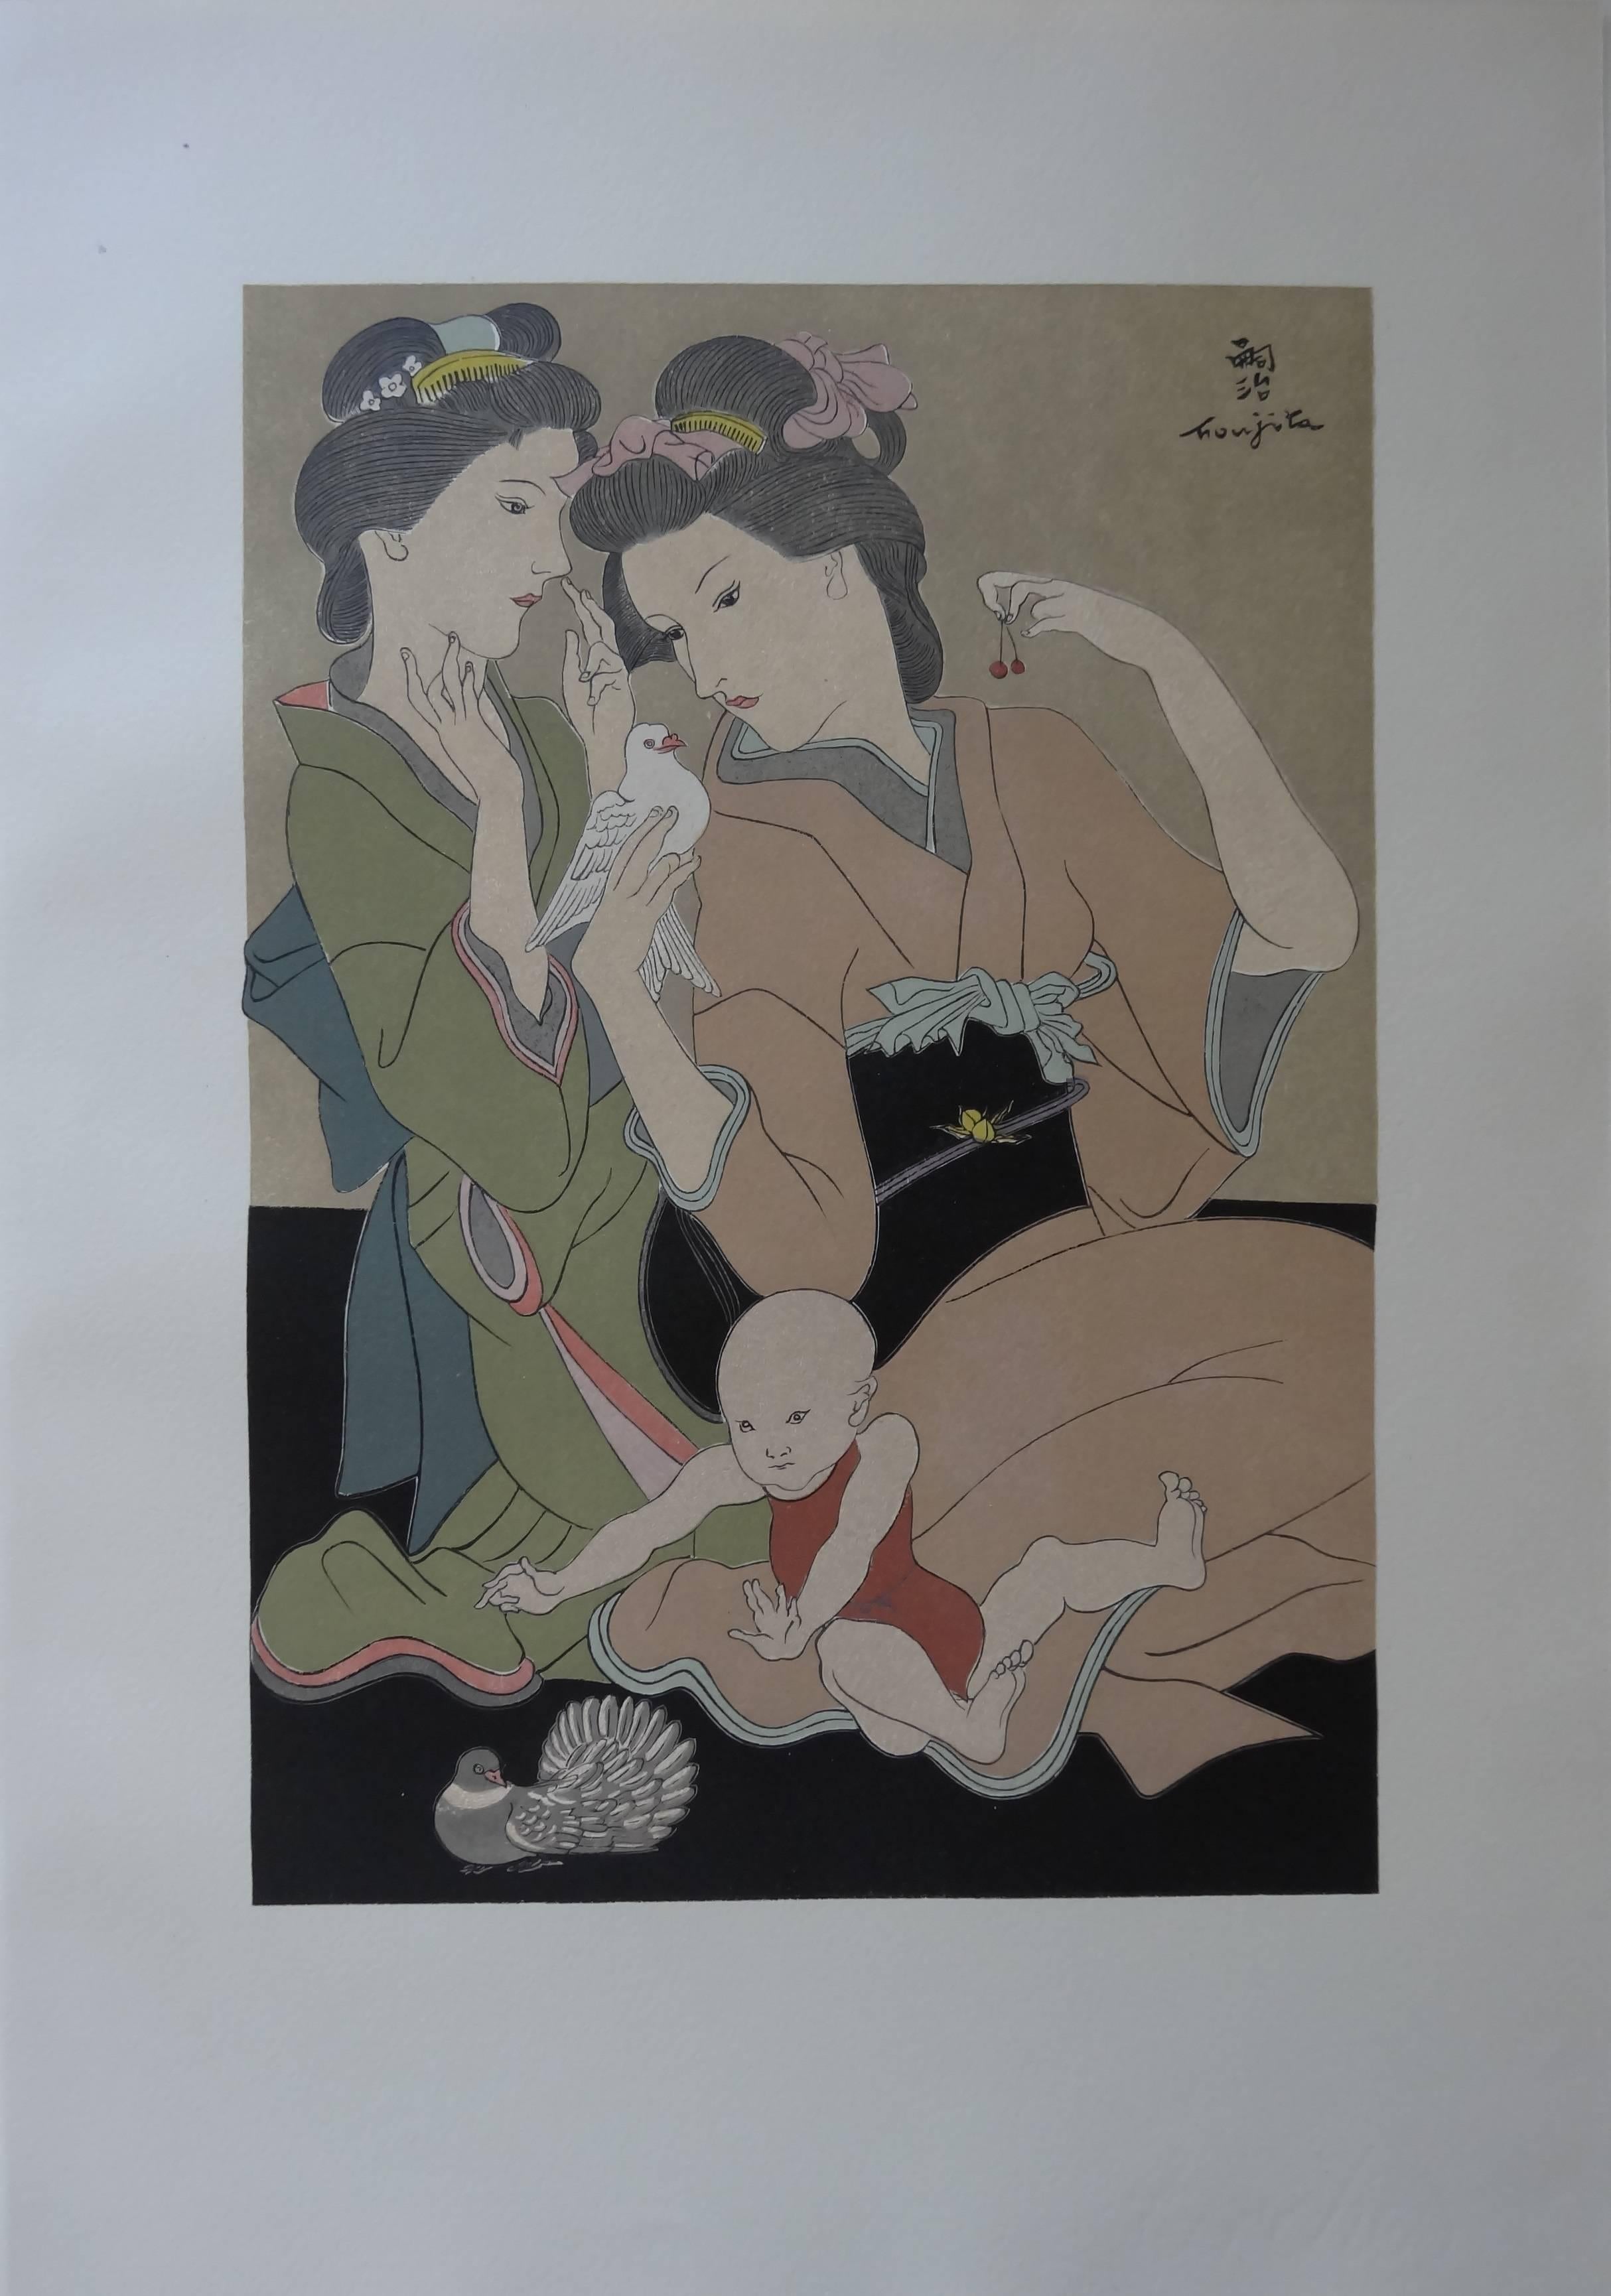 Japanese Geishas with a Dove - Original signed woodcut - 1932 - Realist Print by Tsuguharu Leonard Foujita